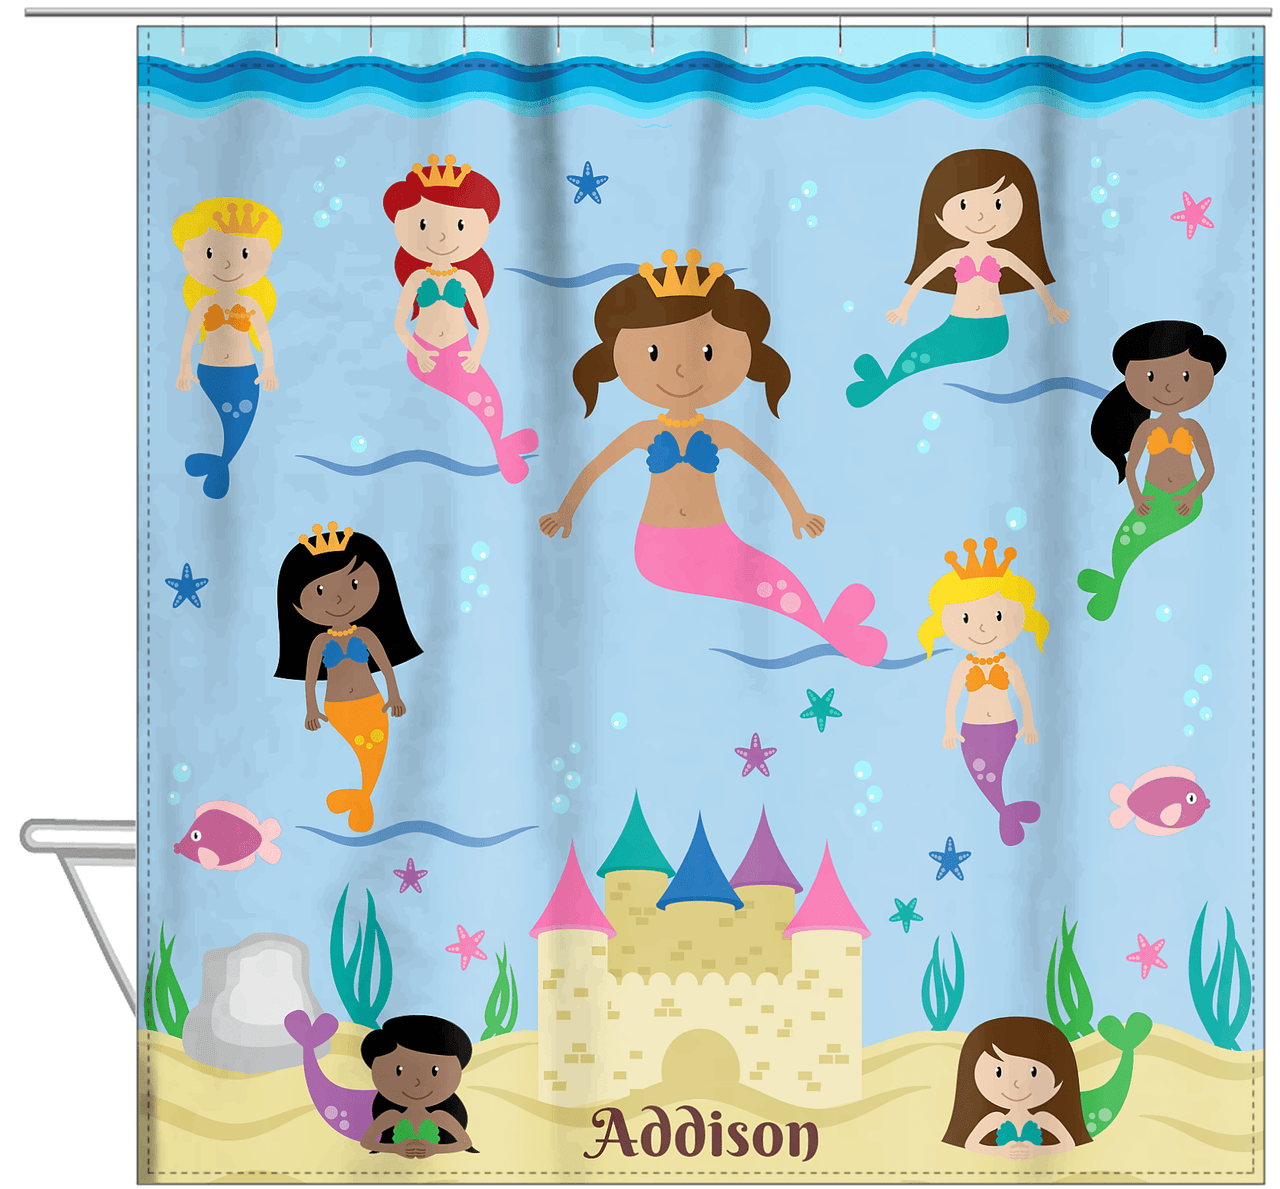 Personalized Mermaid Shower Curtain II - Blue Background - Light Brown Mermaid - Hanging View